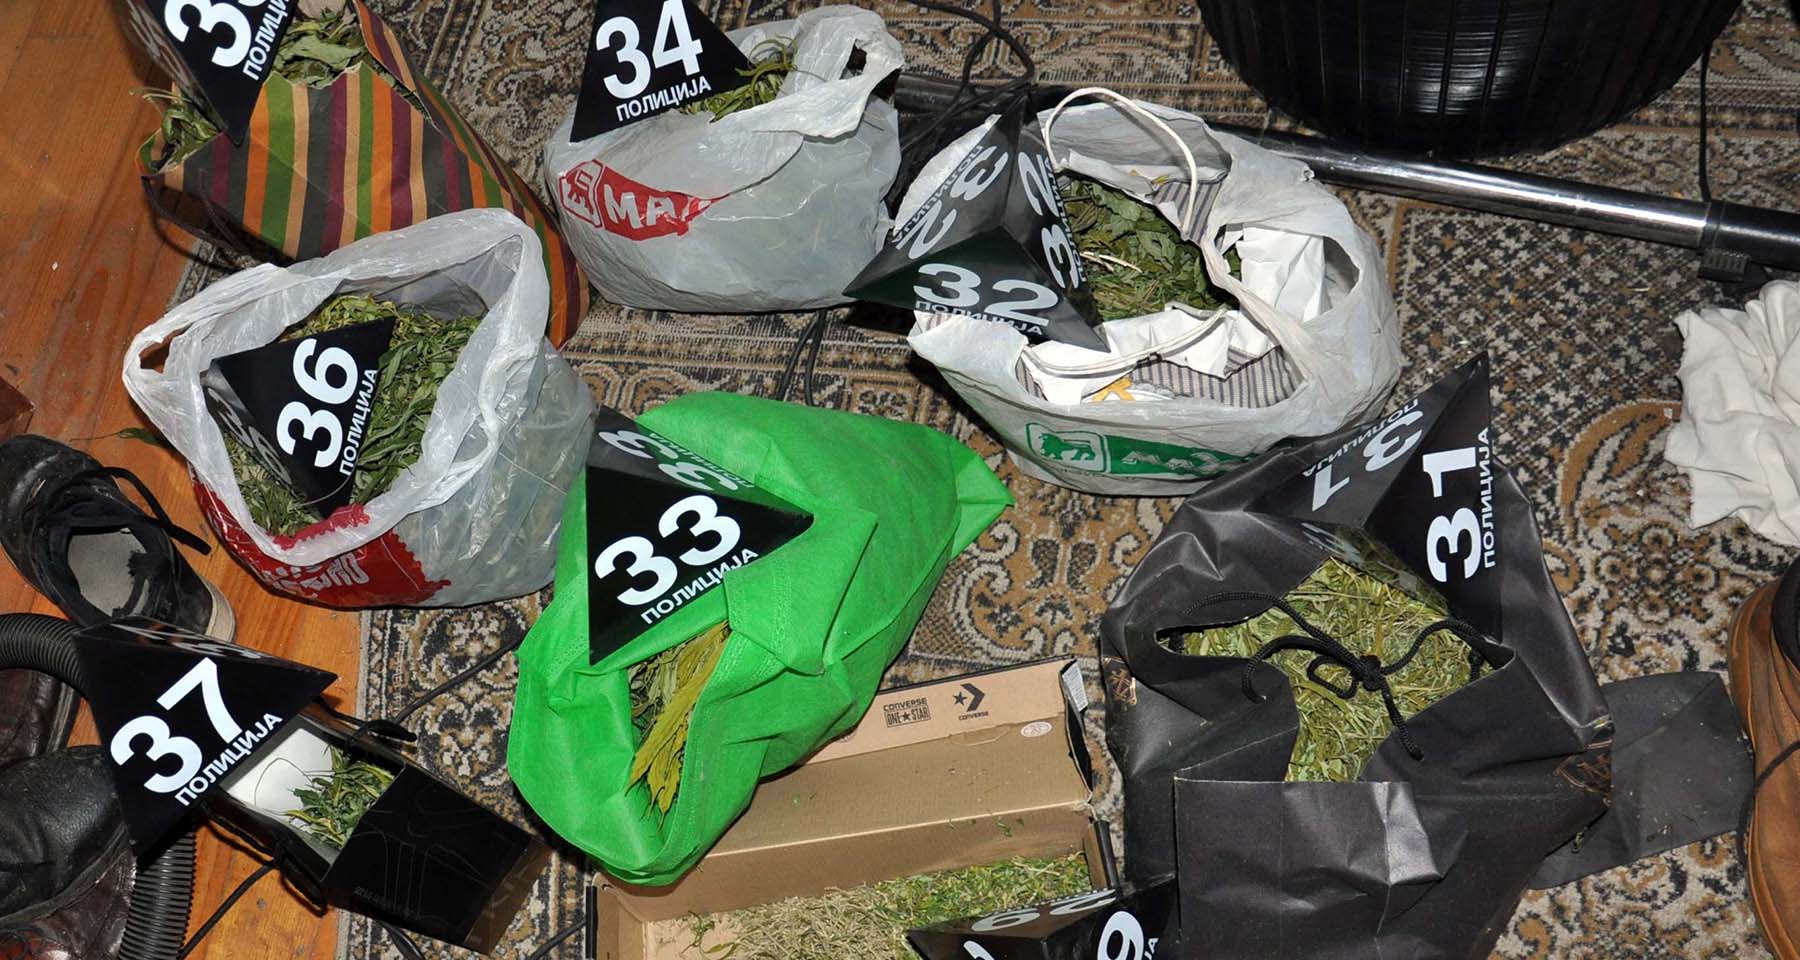 Zaplenjeno oko četiri kilograma marihuane, semenke kanabisa, stabljike indijske konoplje i uhapšen osumnjičeni